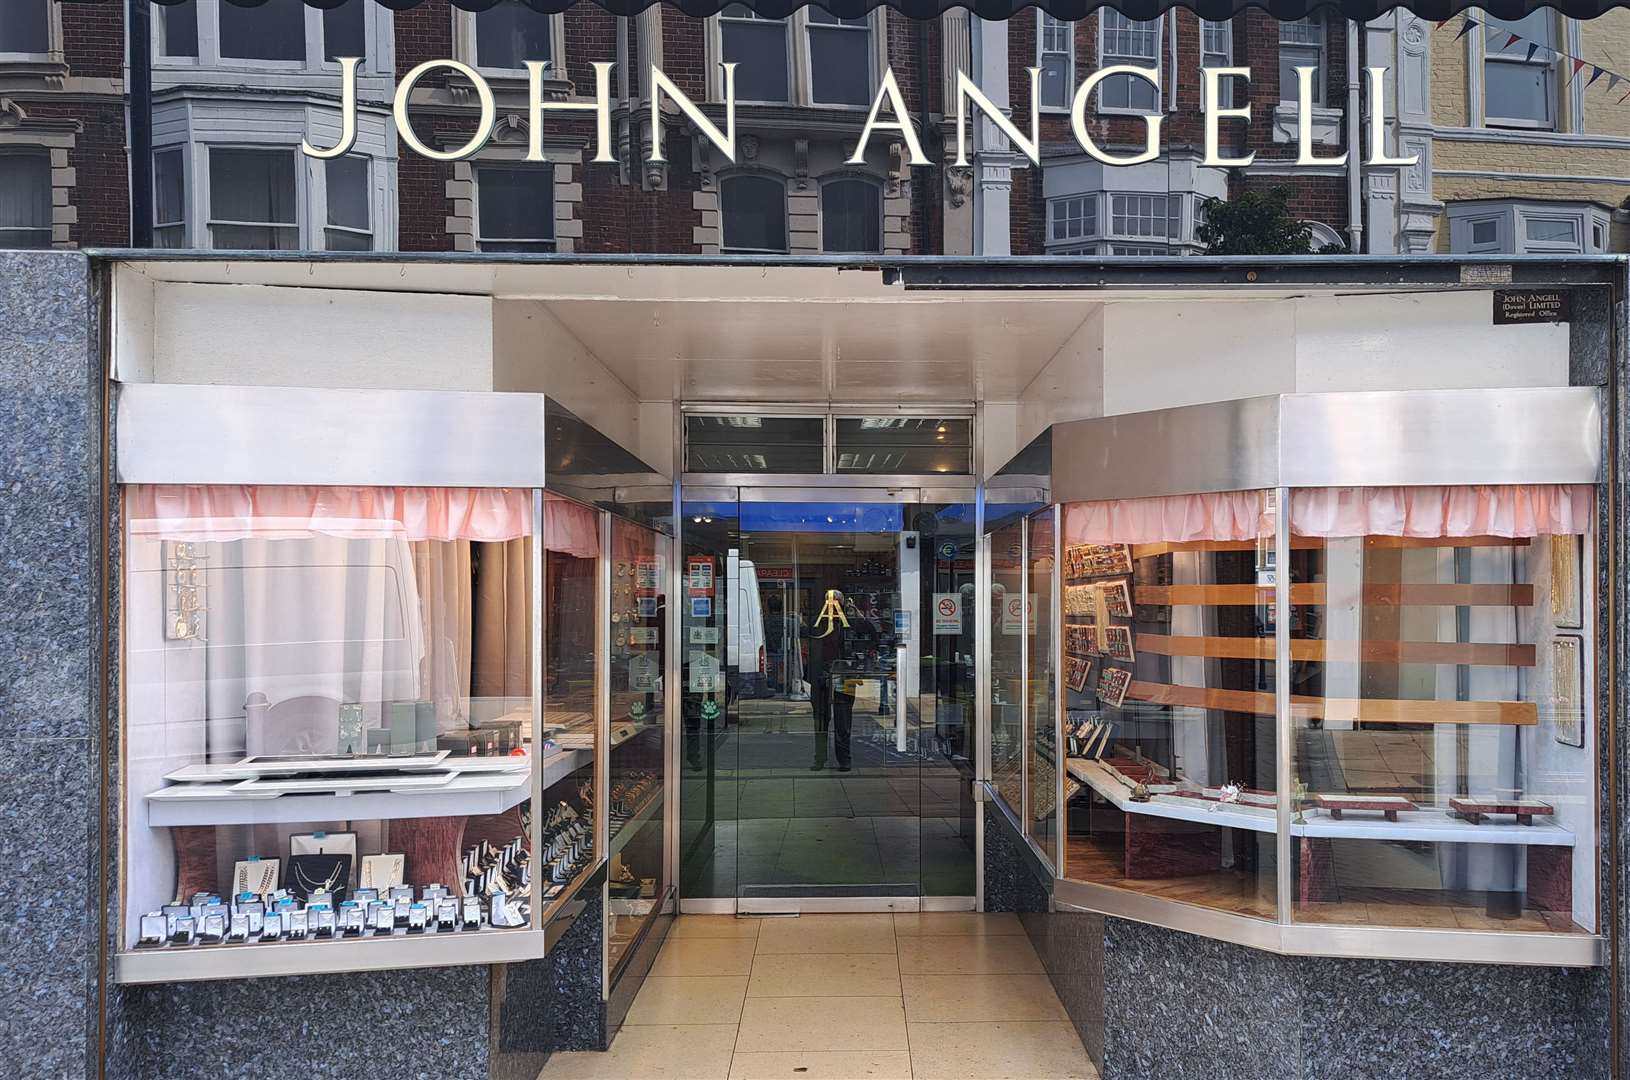 The John Angell jewellers in Biggin Street, Dover